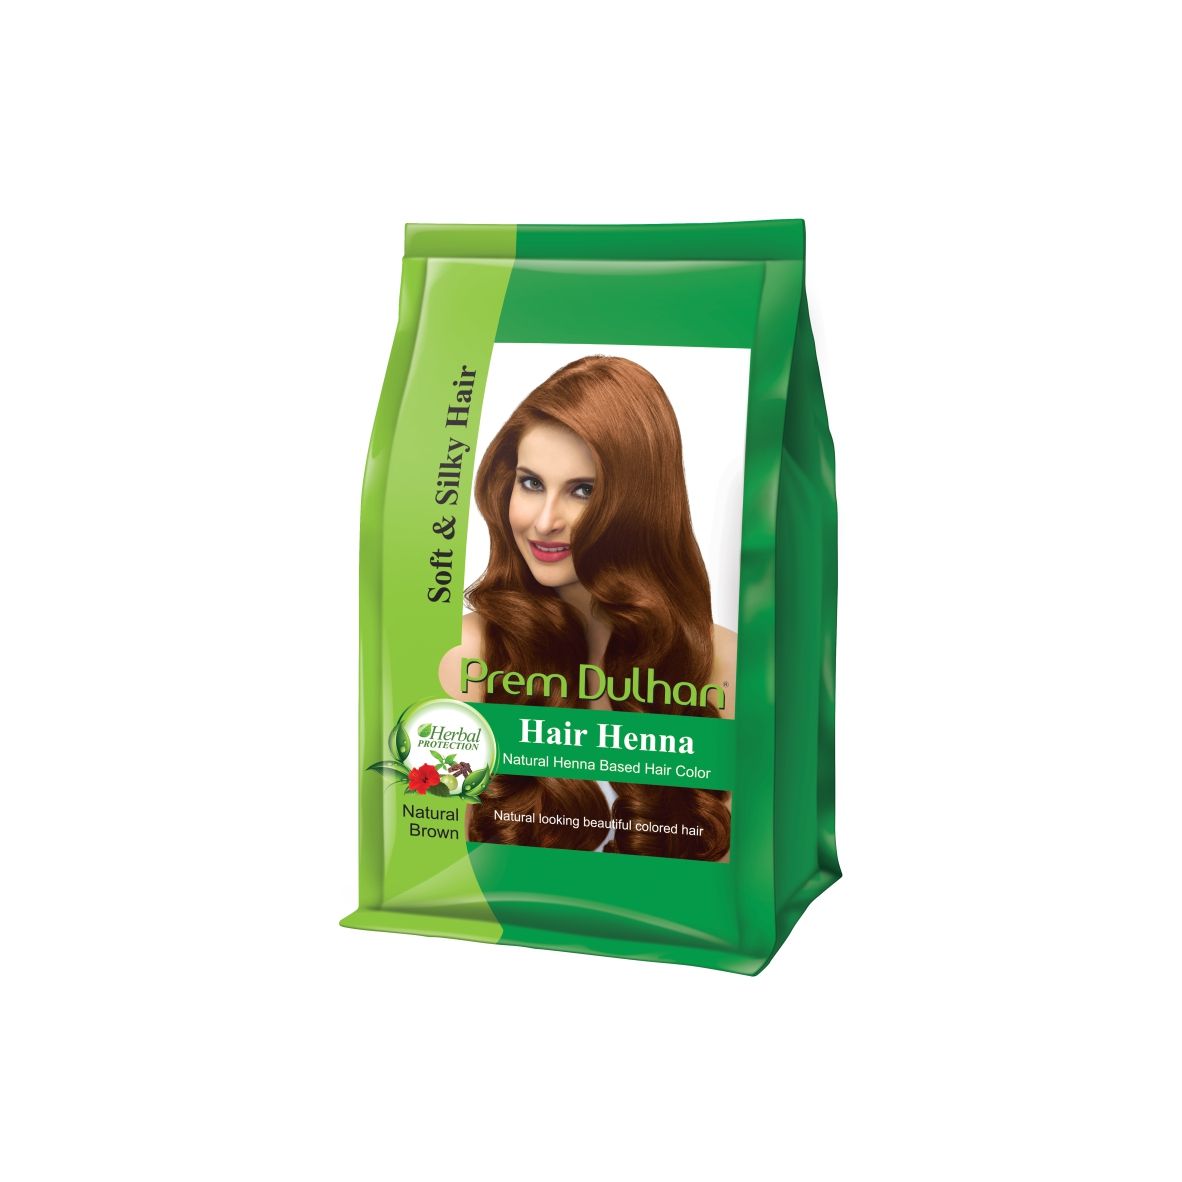 Prem Dulhan Hair Henna Natural Brown Henna Based hair Color - 125GM ( Pack of 1 )